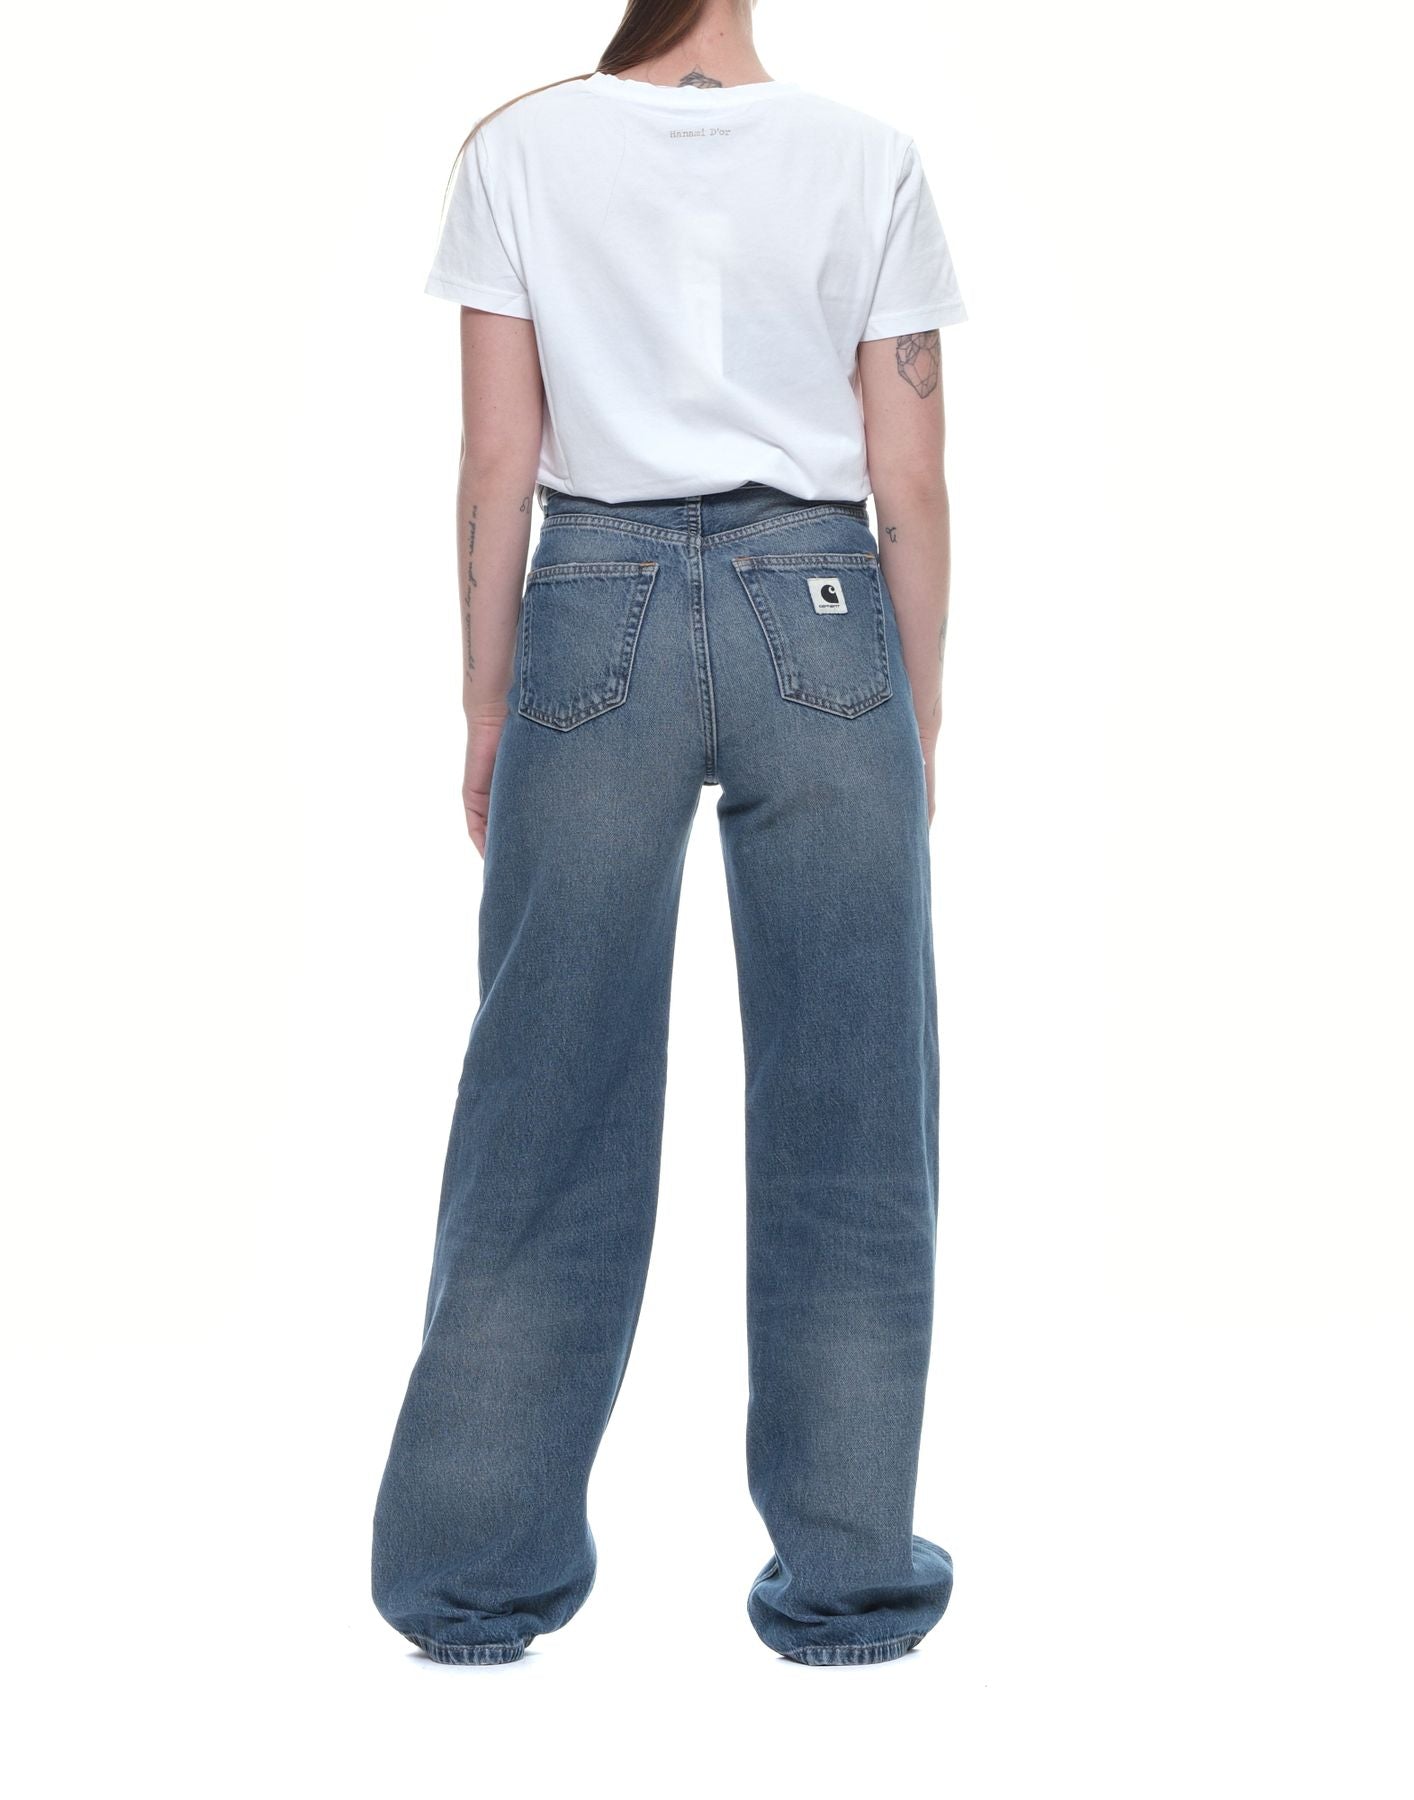 Jeans woman i030497 blu scuro carhartt wip